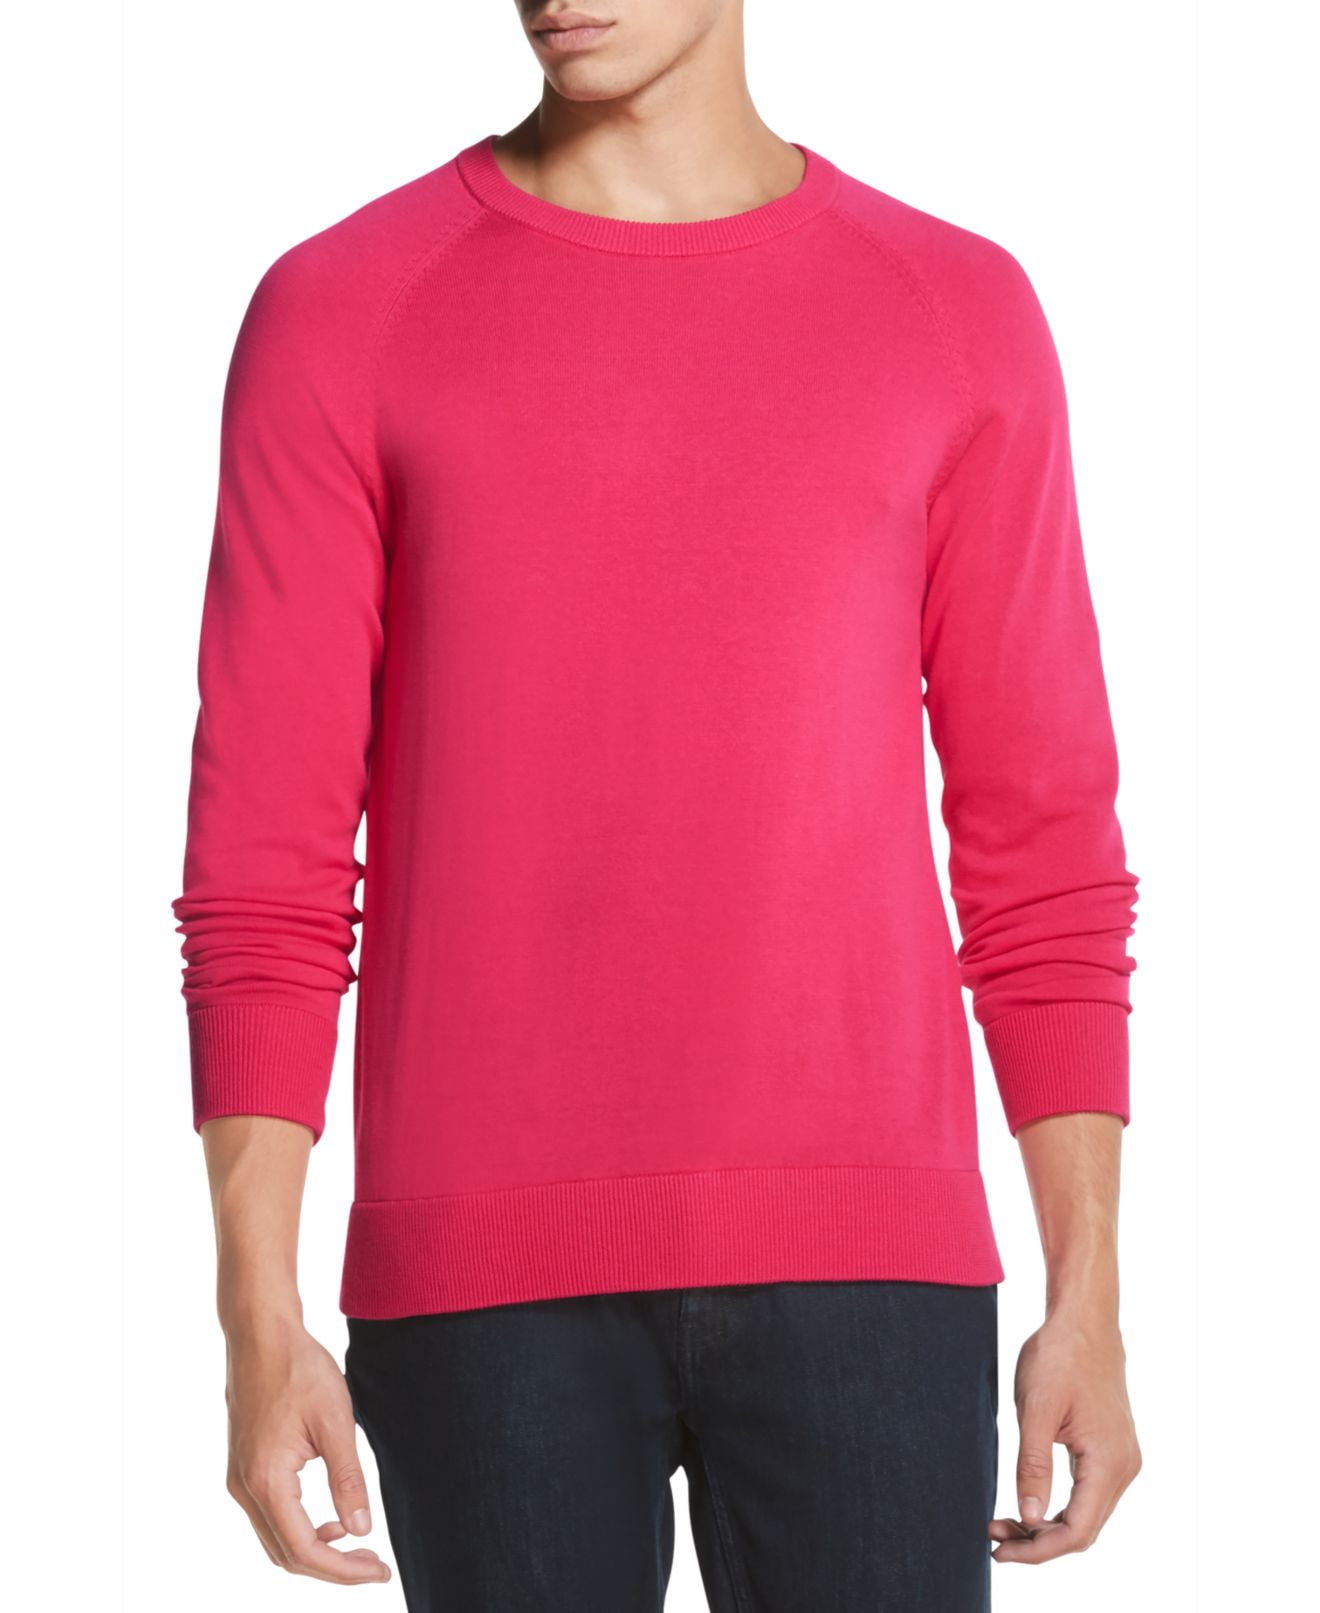 DKNY Men's Twill Crewneck Sweater